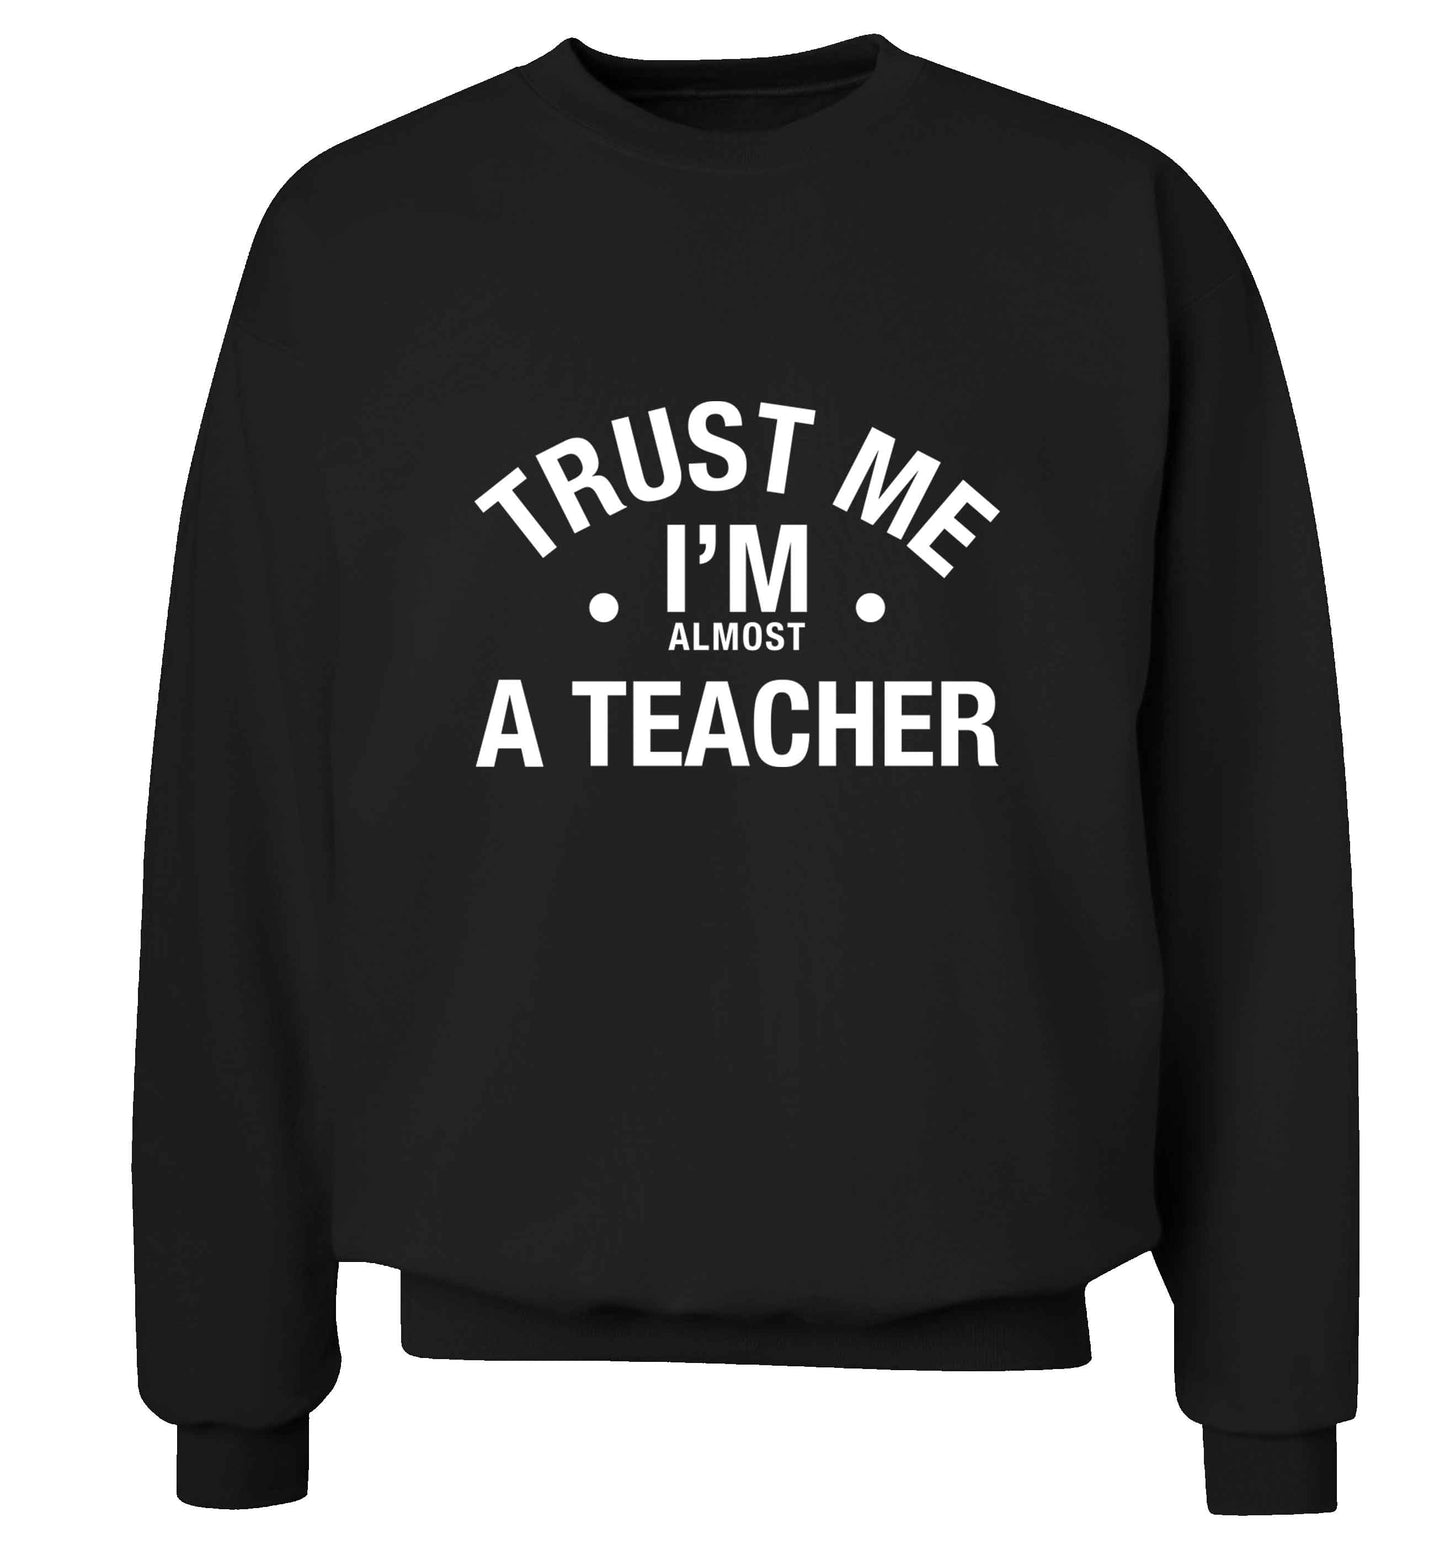 Trust me I'm almost a teacher adult's unisex black sweater 2XL